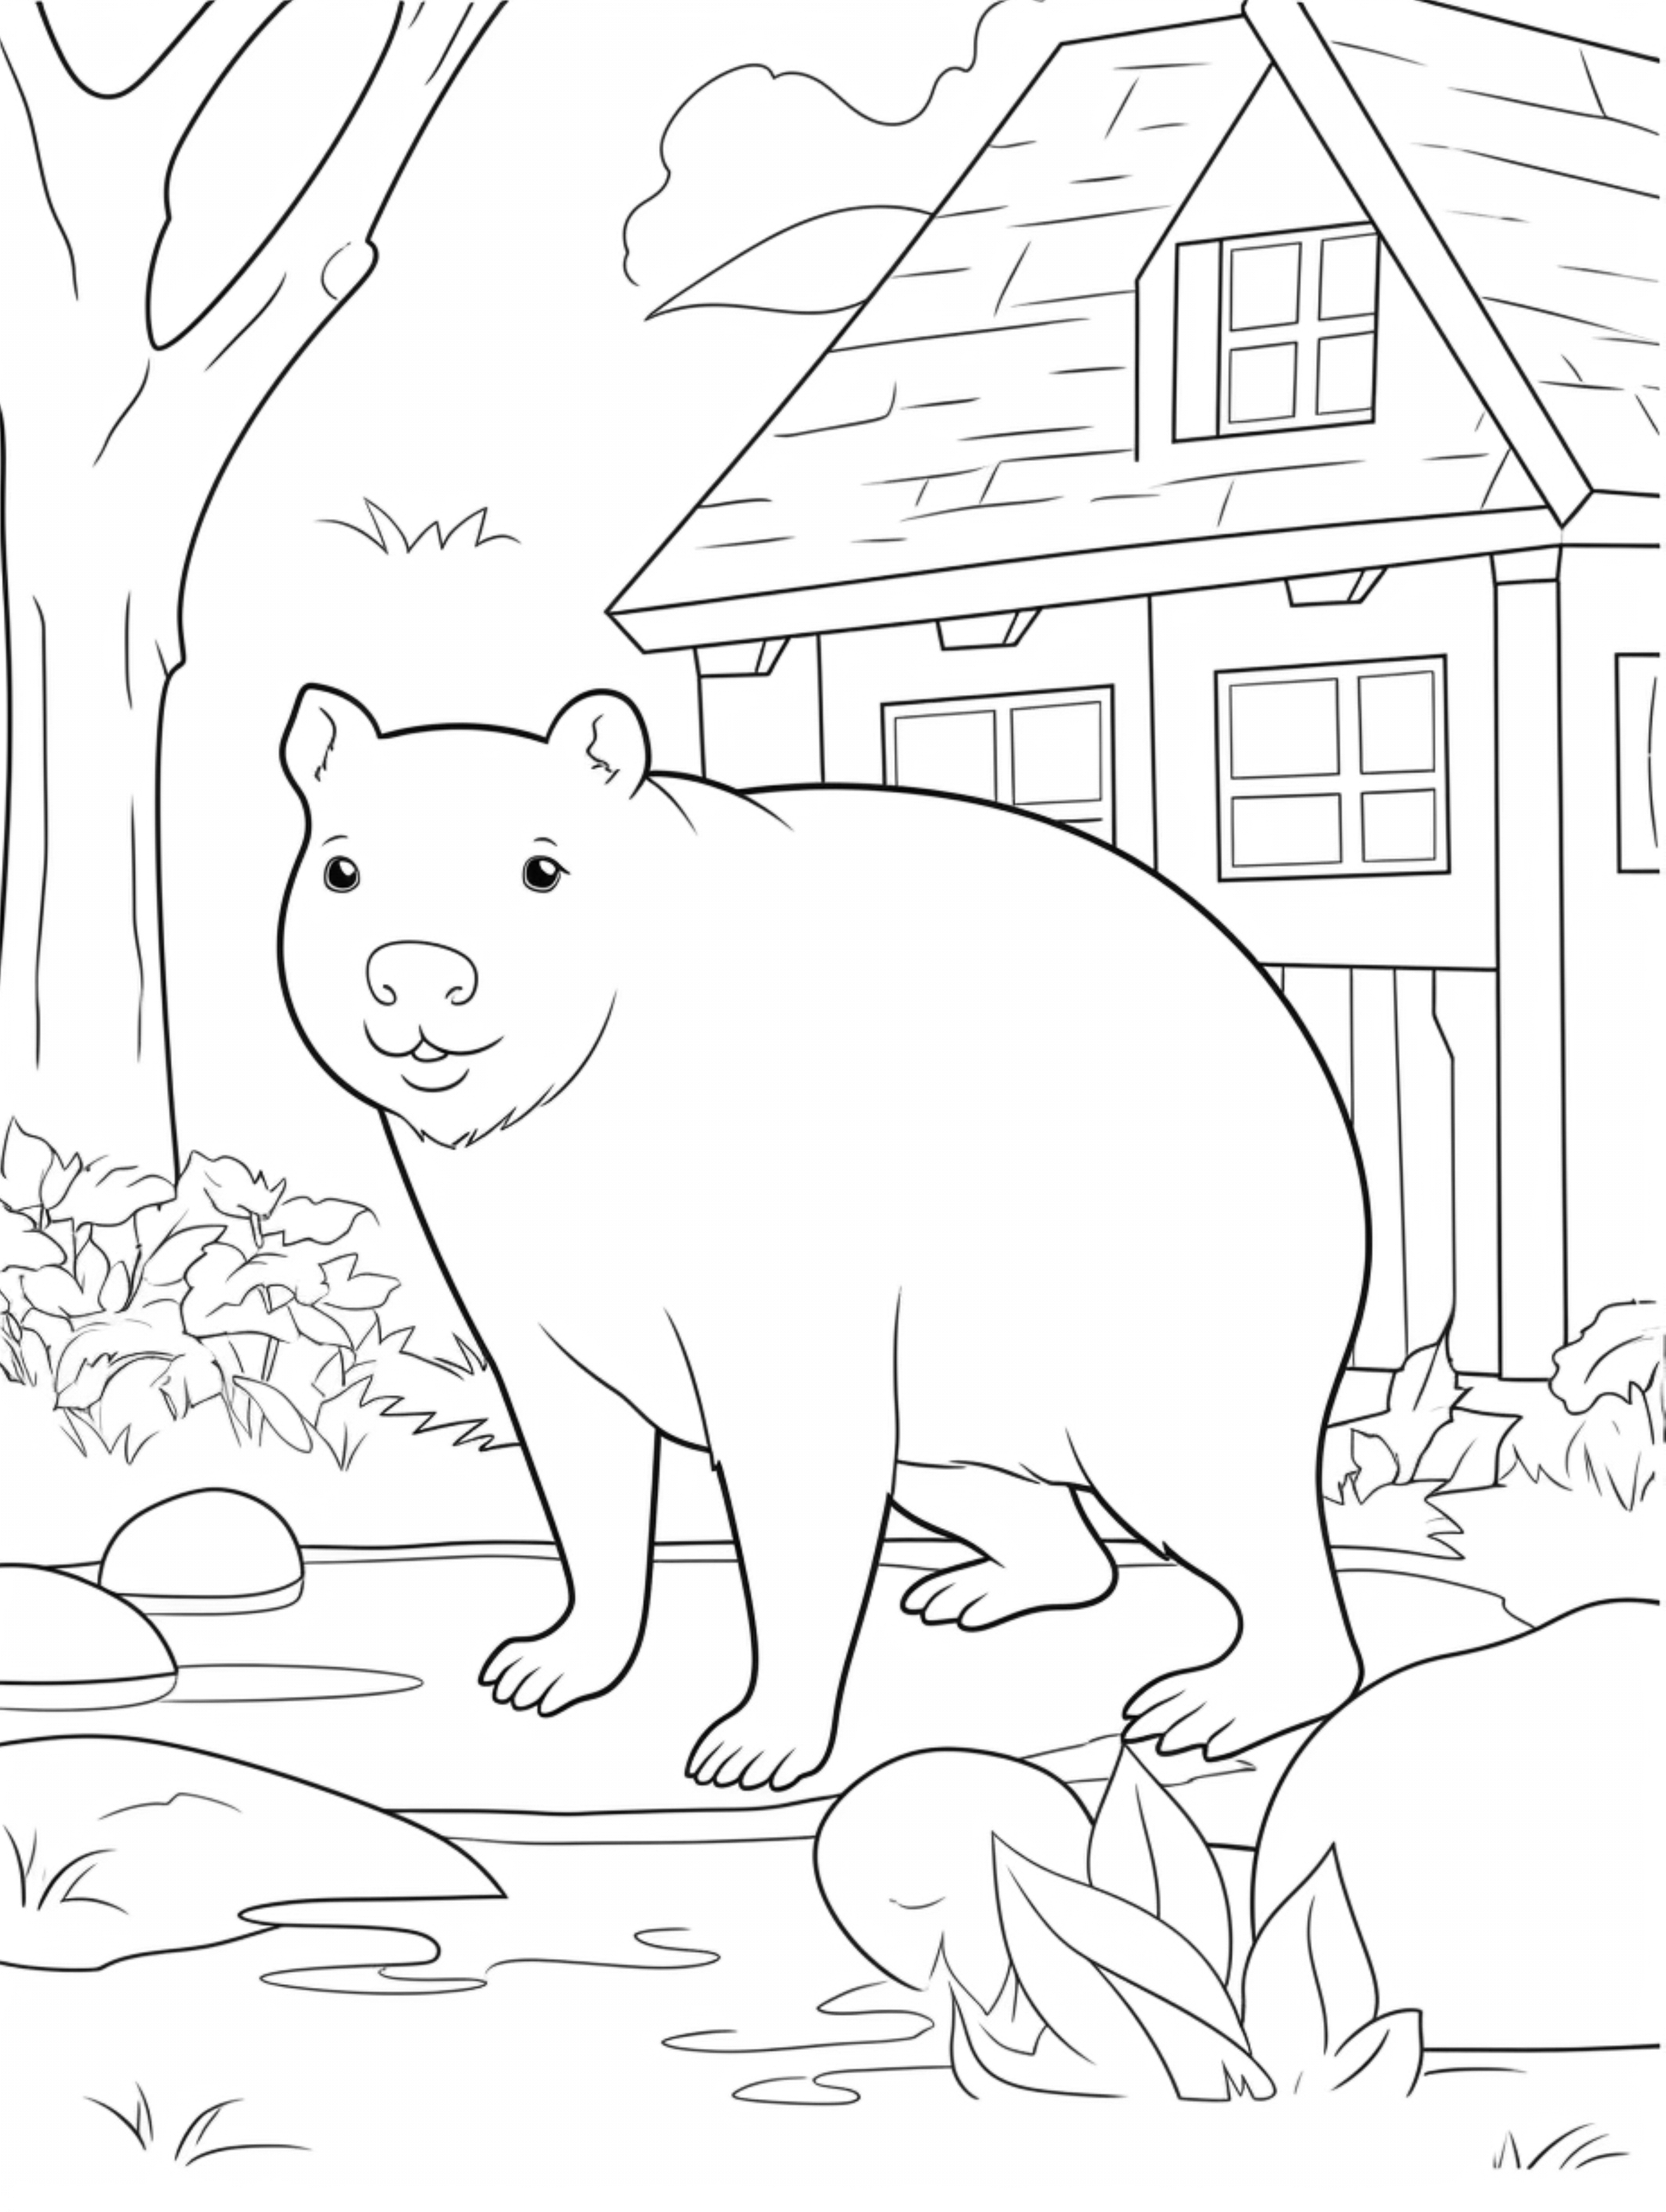 capybara coloring page